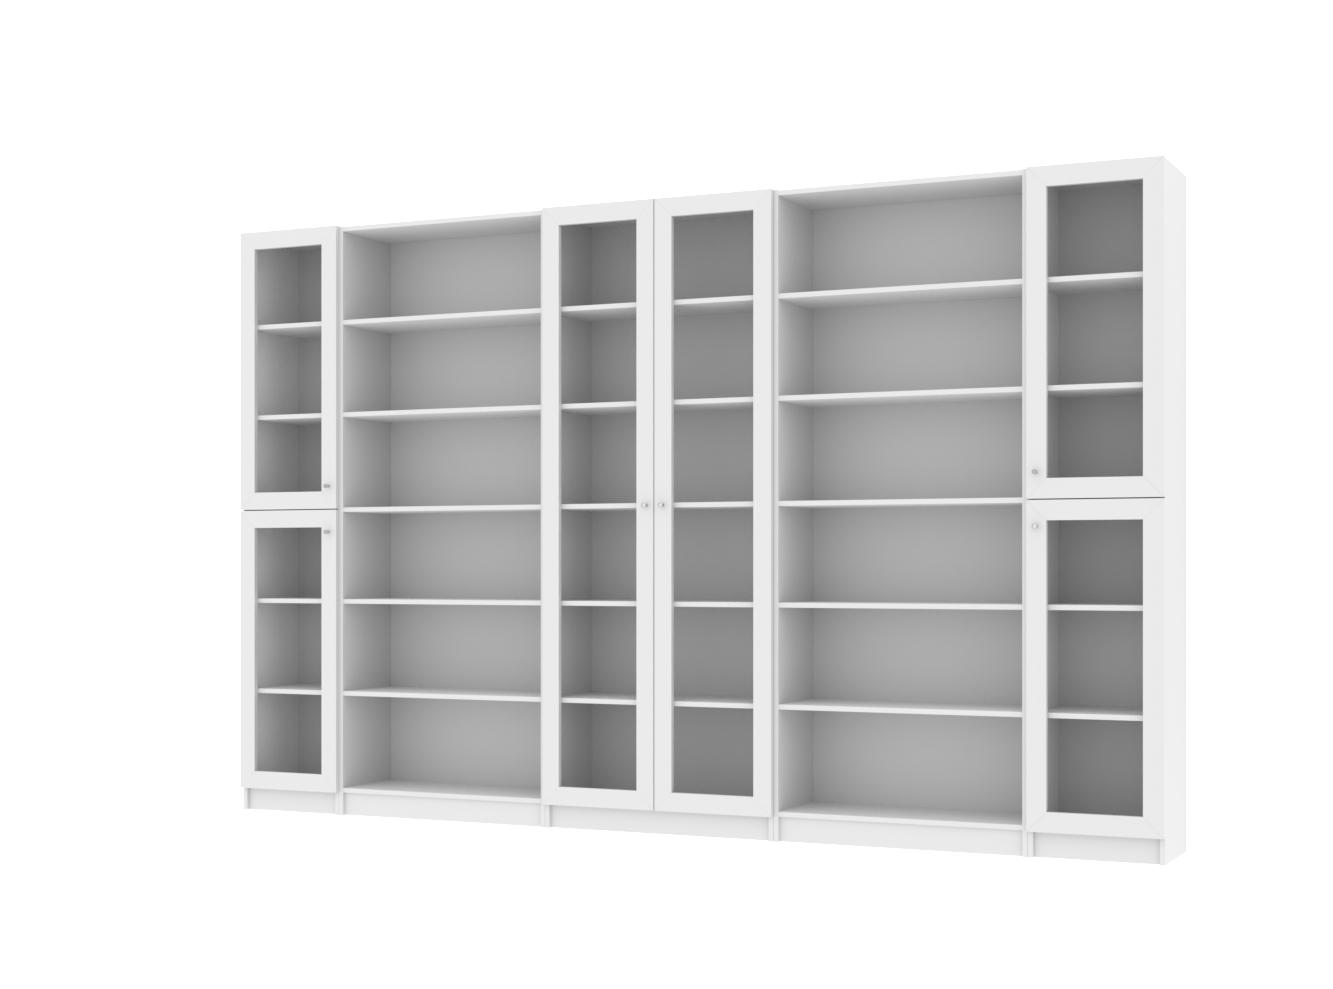  Книжный шкаф Билли 371 white ИКЕА (IKEA) изображение товара